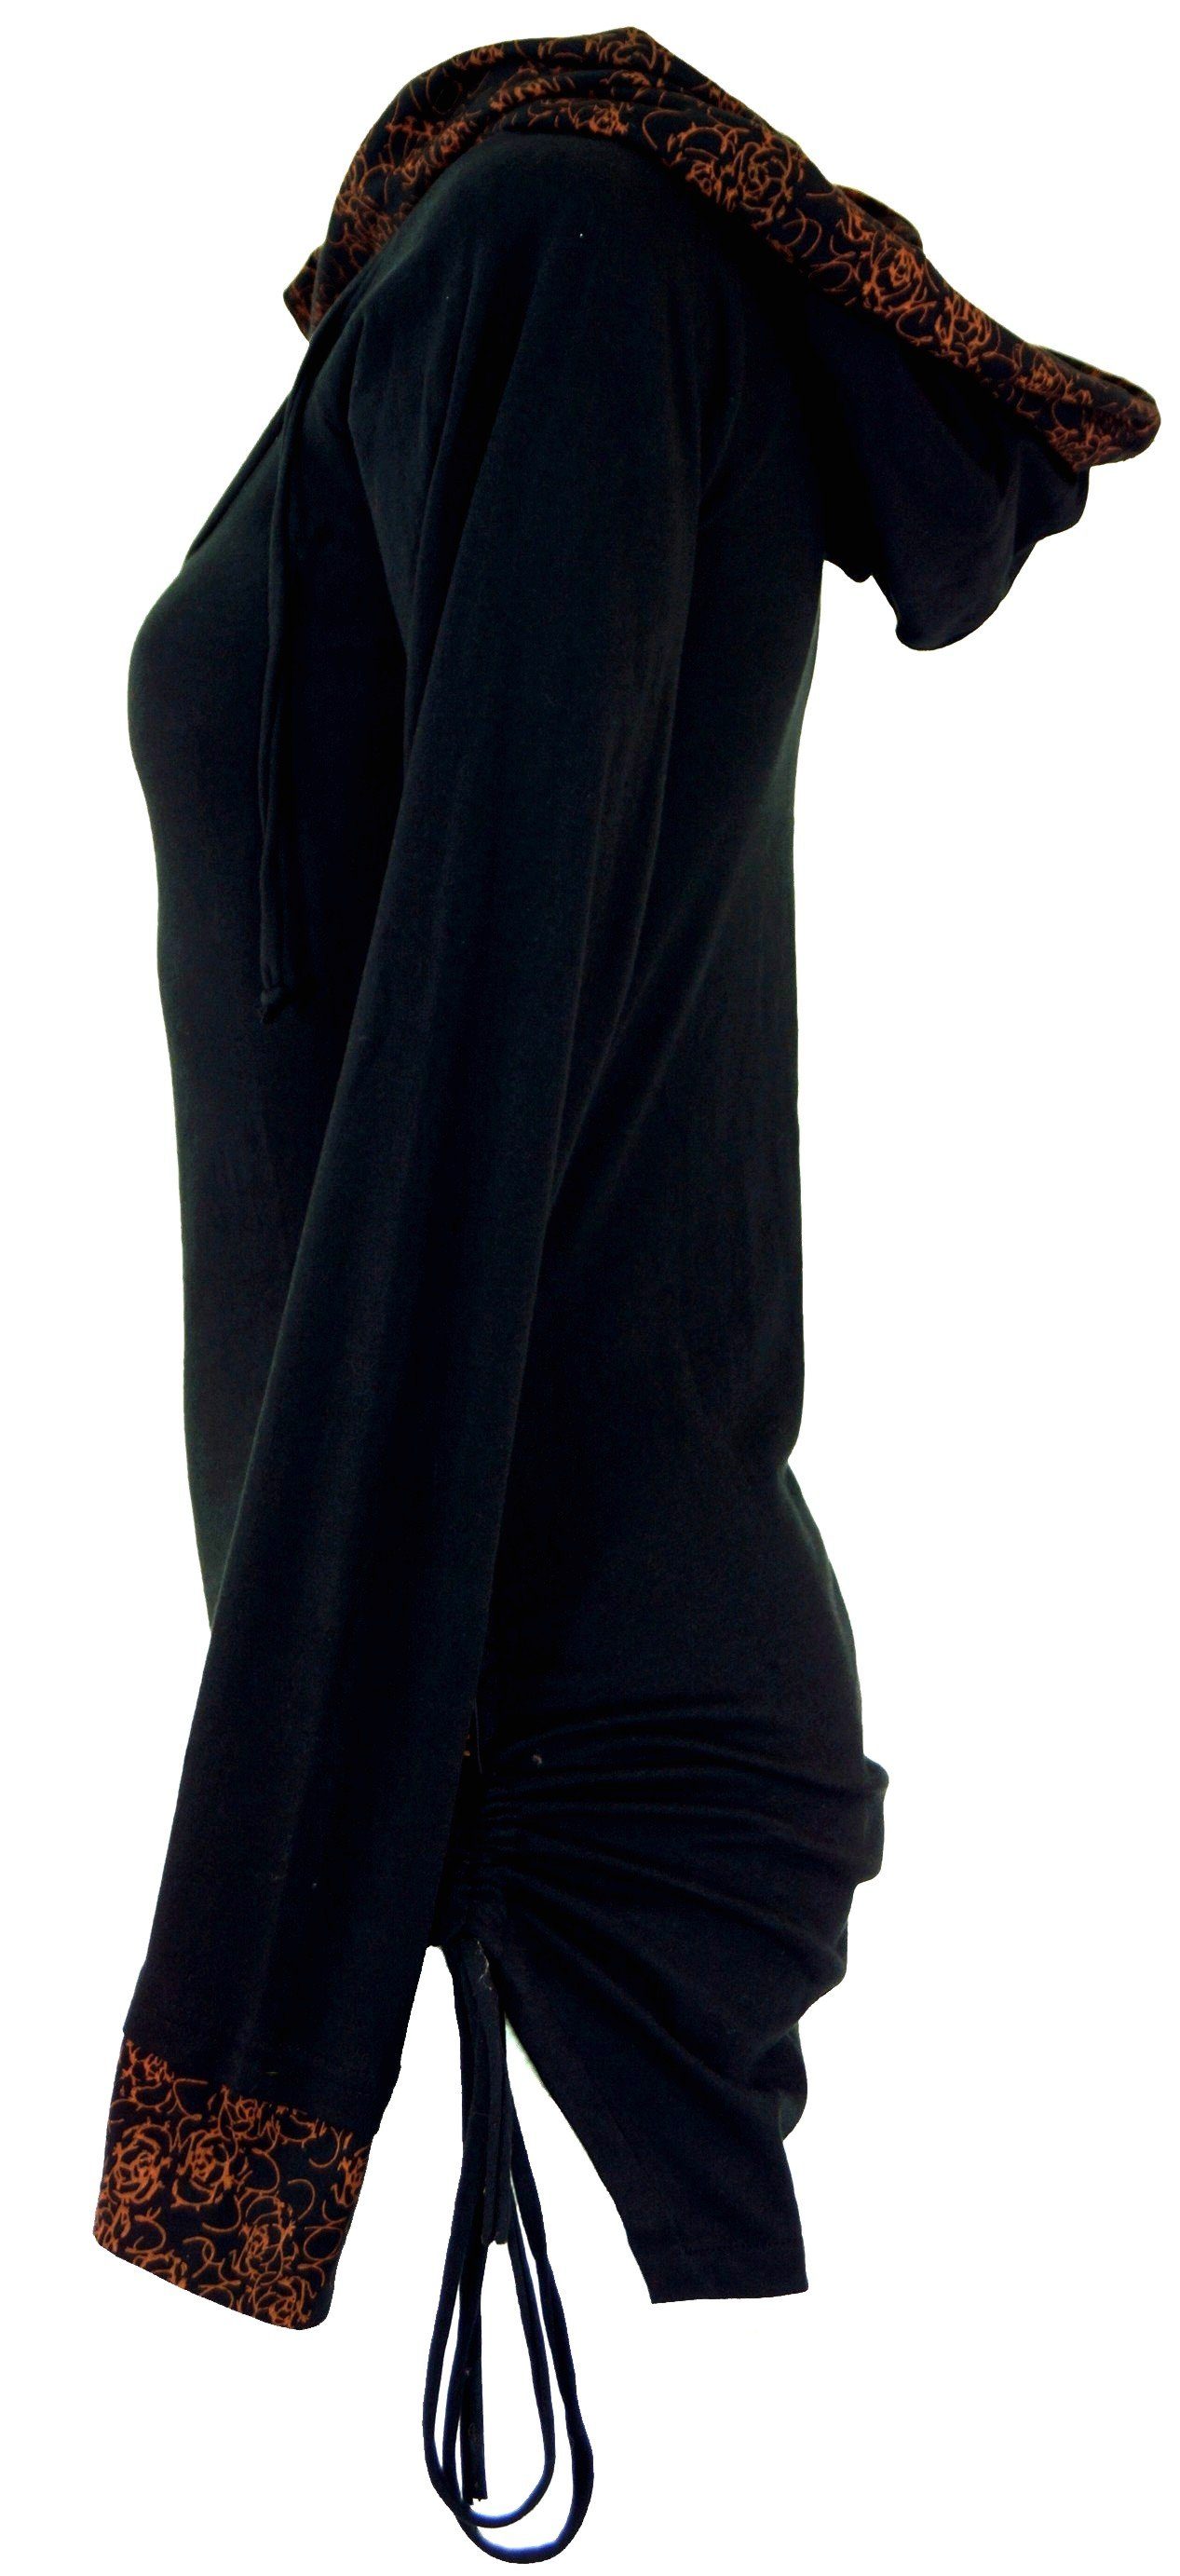 Bio-Baumwolle, Boho Guru-Shop Longshirt aus Bekleidung Longsleeve alternative schwarz/orange Shirt..